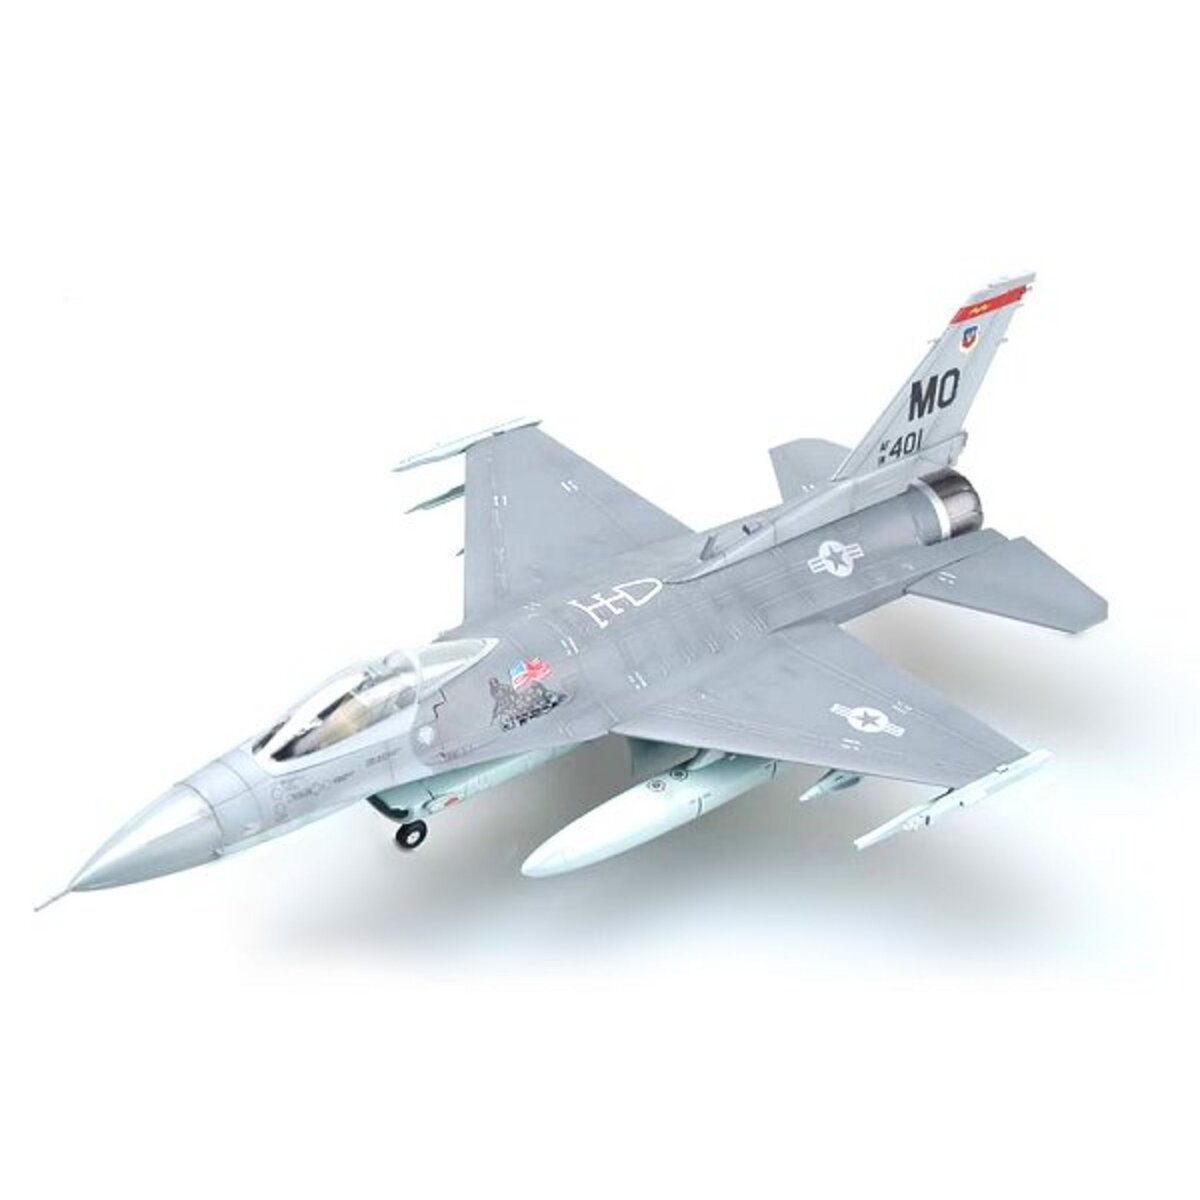 Easy Model Modèle réduit : General Dynamics F-16C Fighting Falcon USAF 91-0401-MO